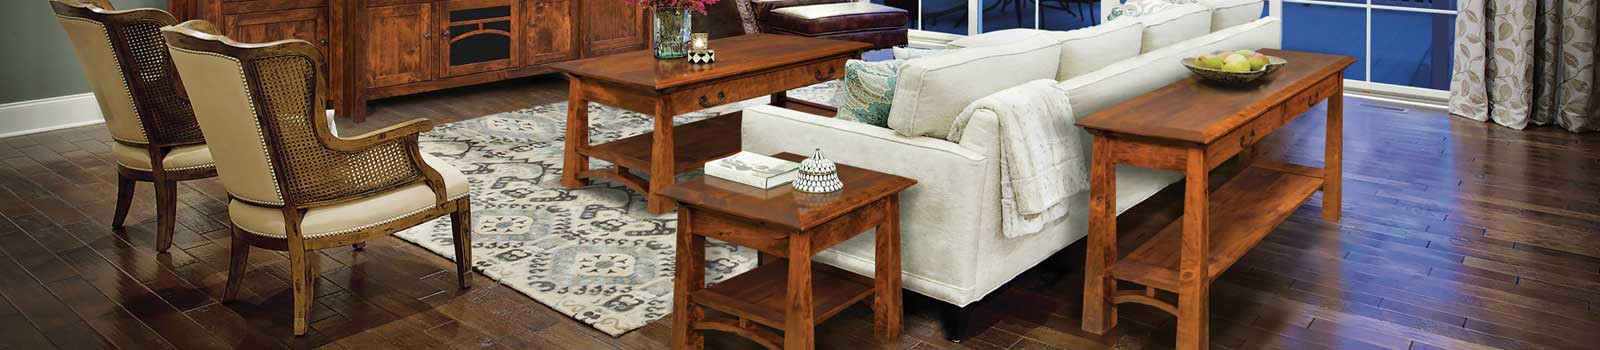 amish living room furniture budget price